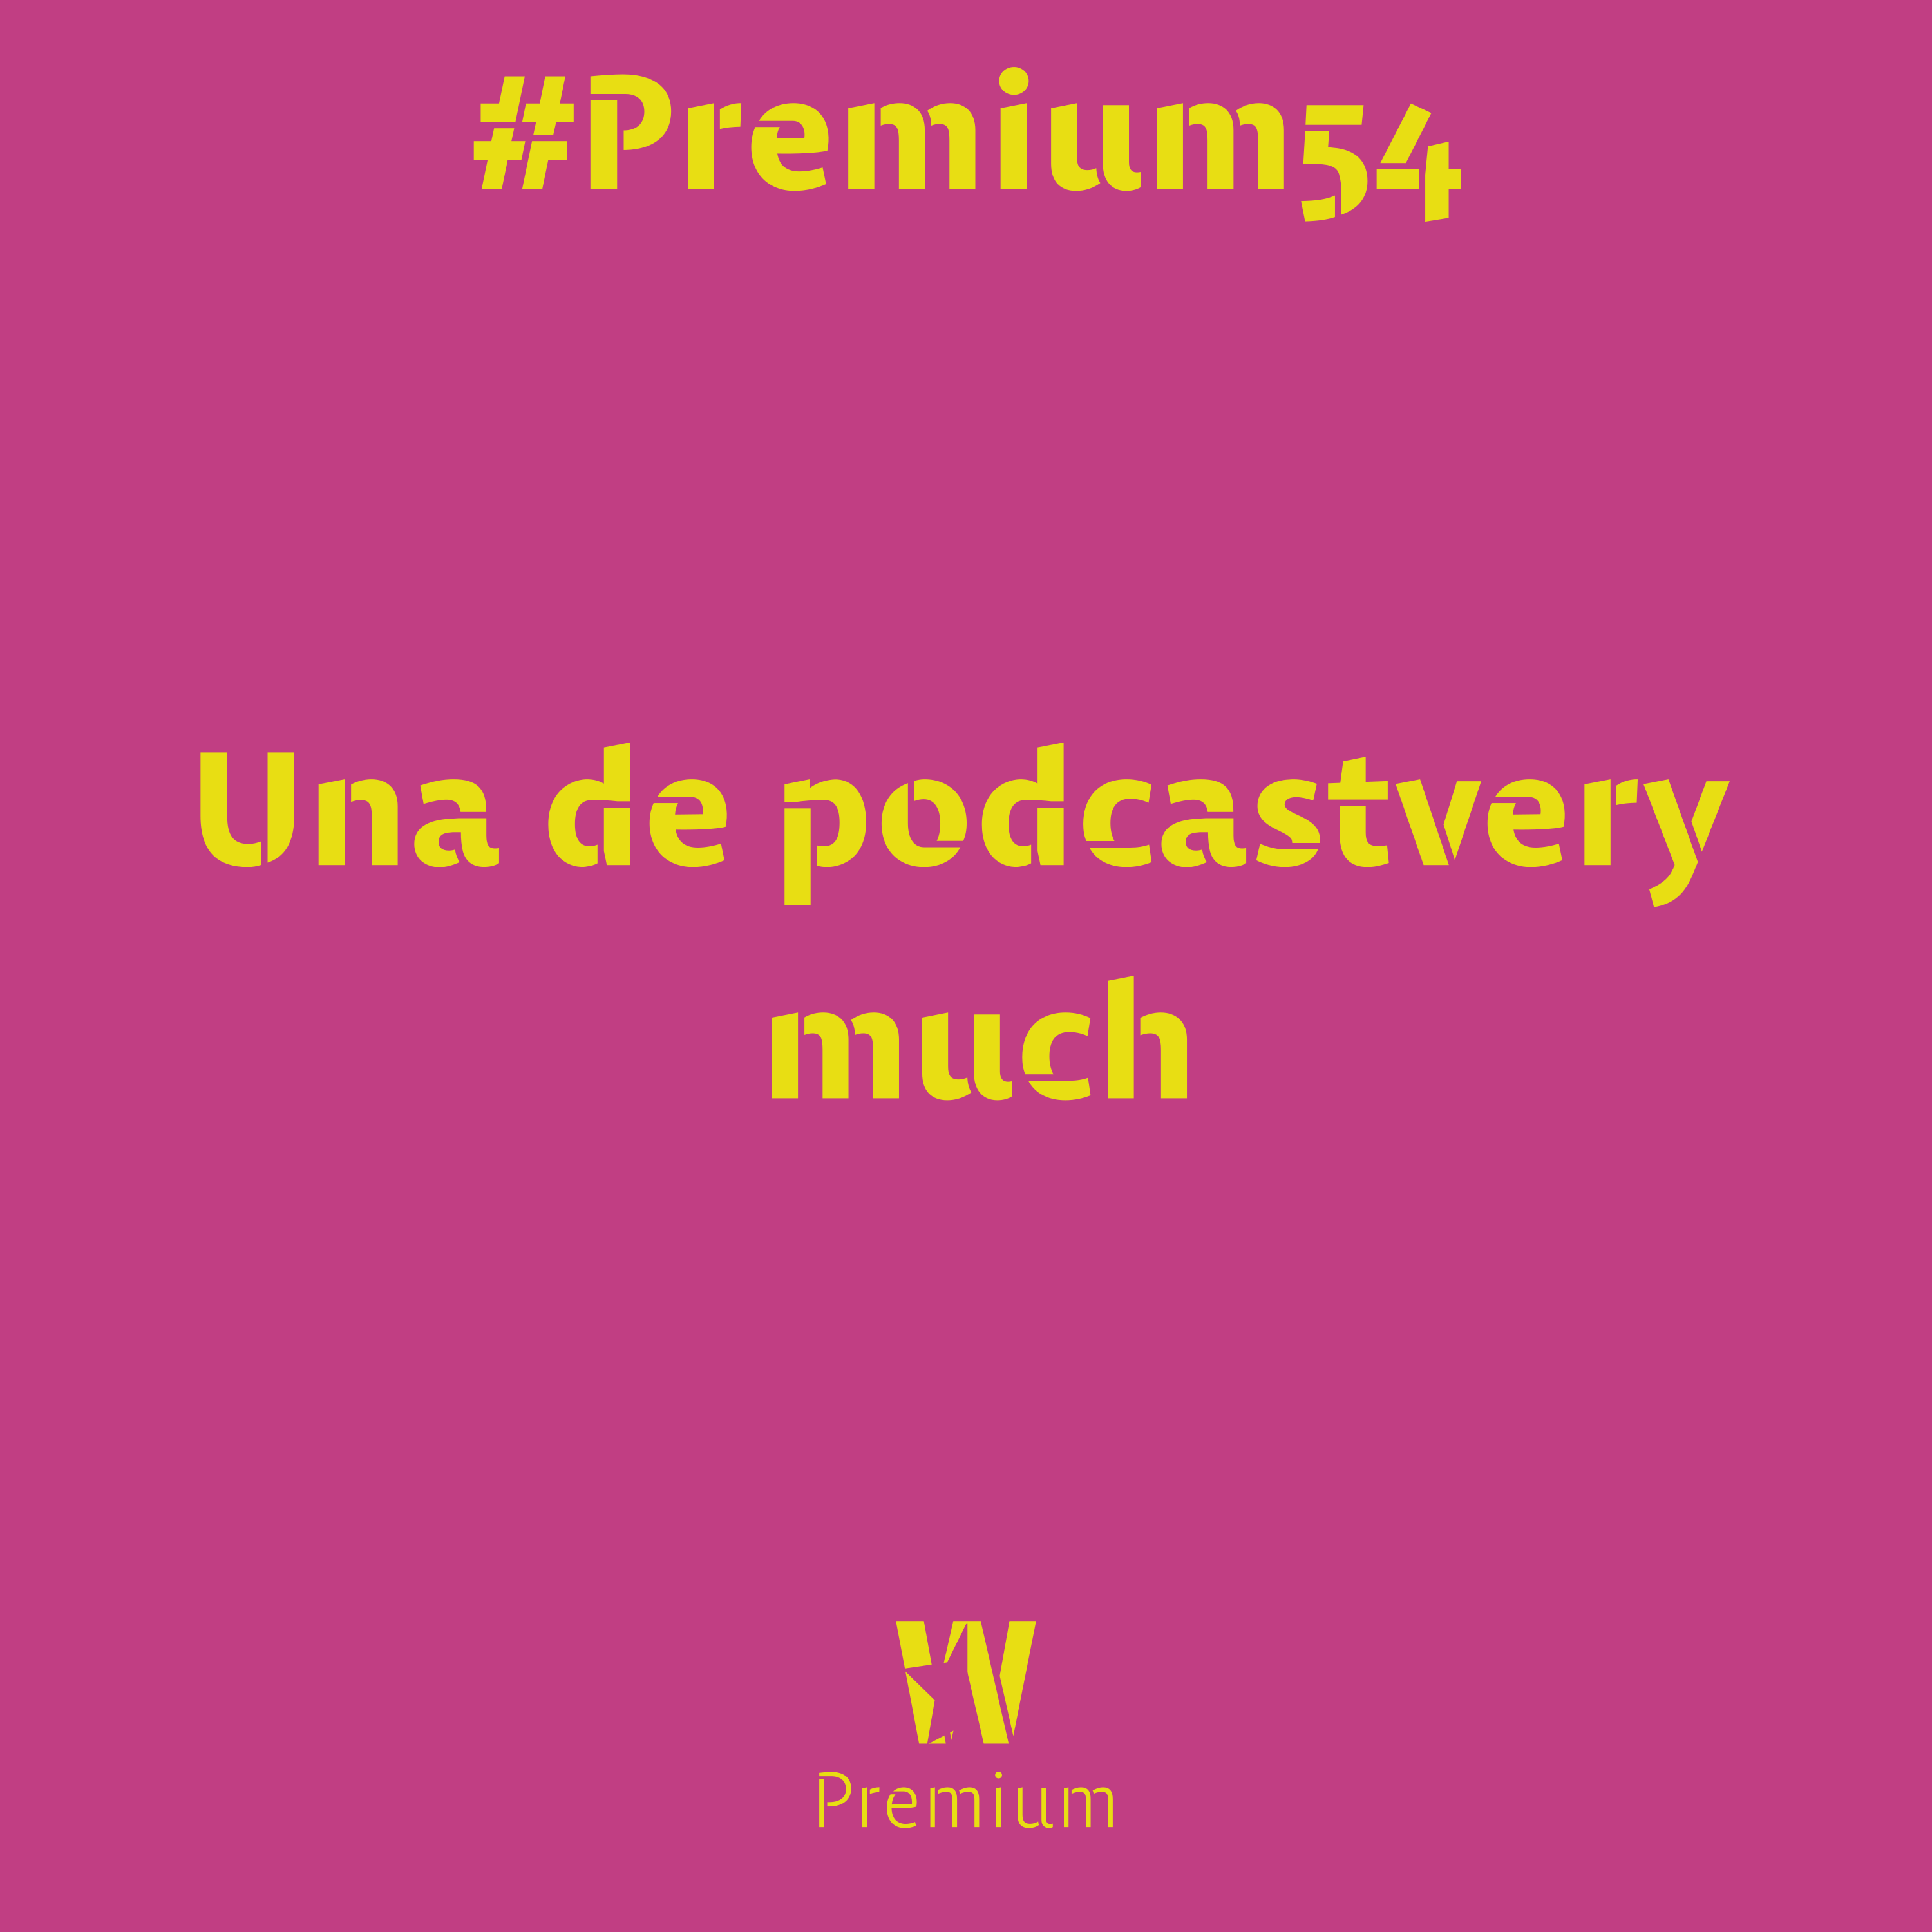 #Premium54 - Una de podcastvery much